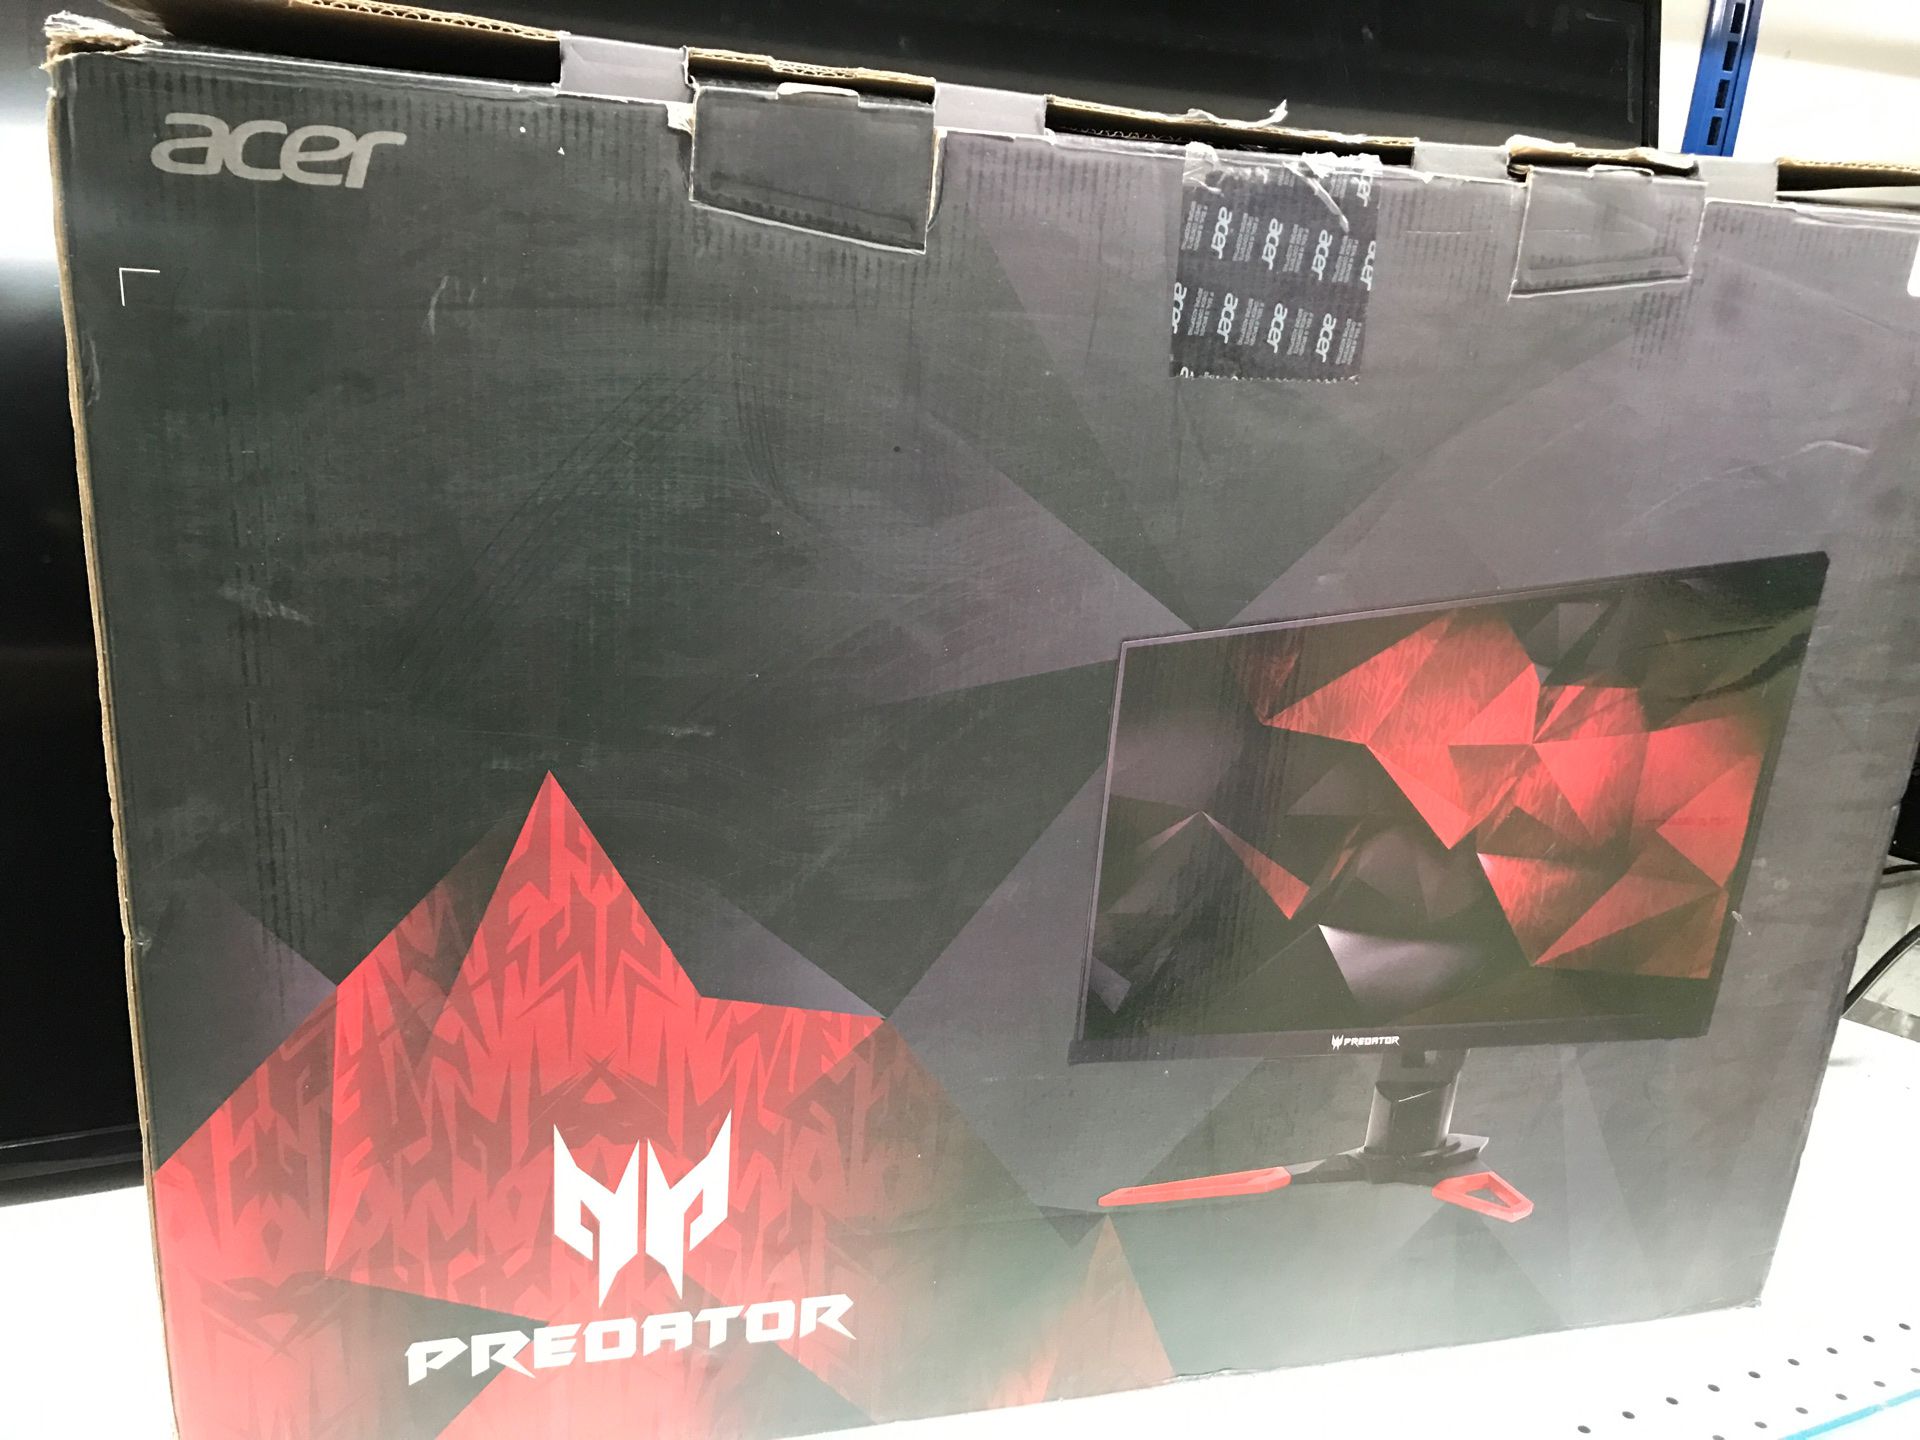 Predator gaming monitor